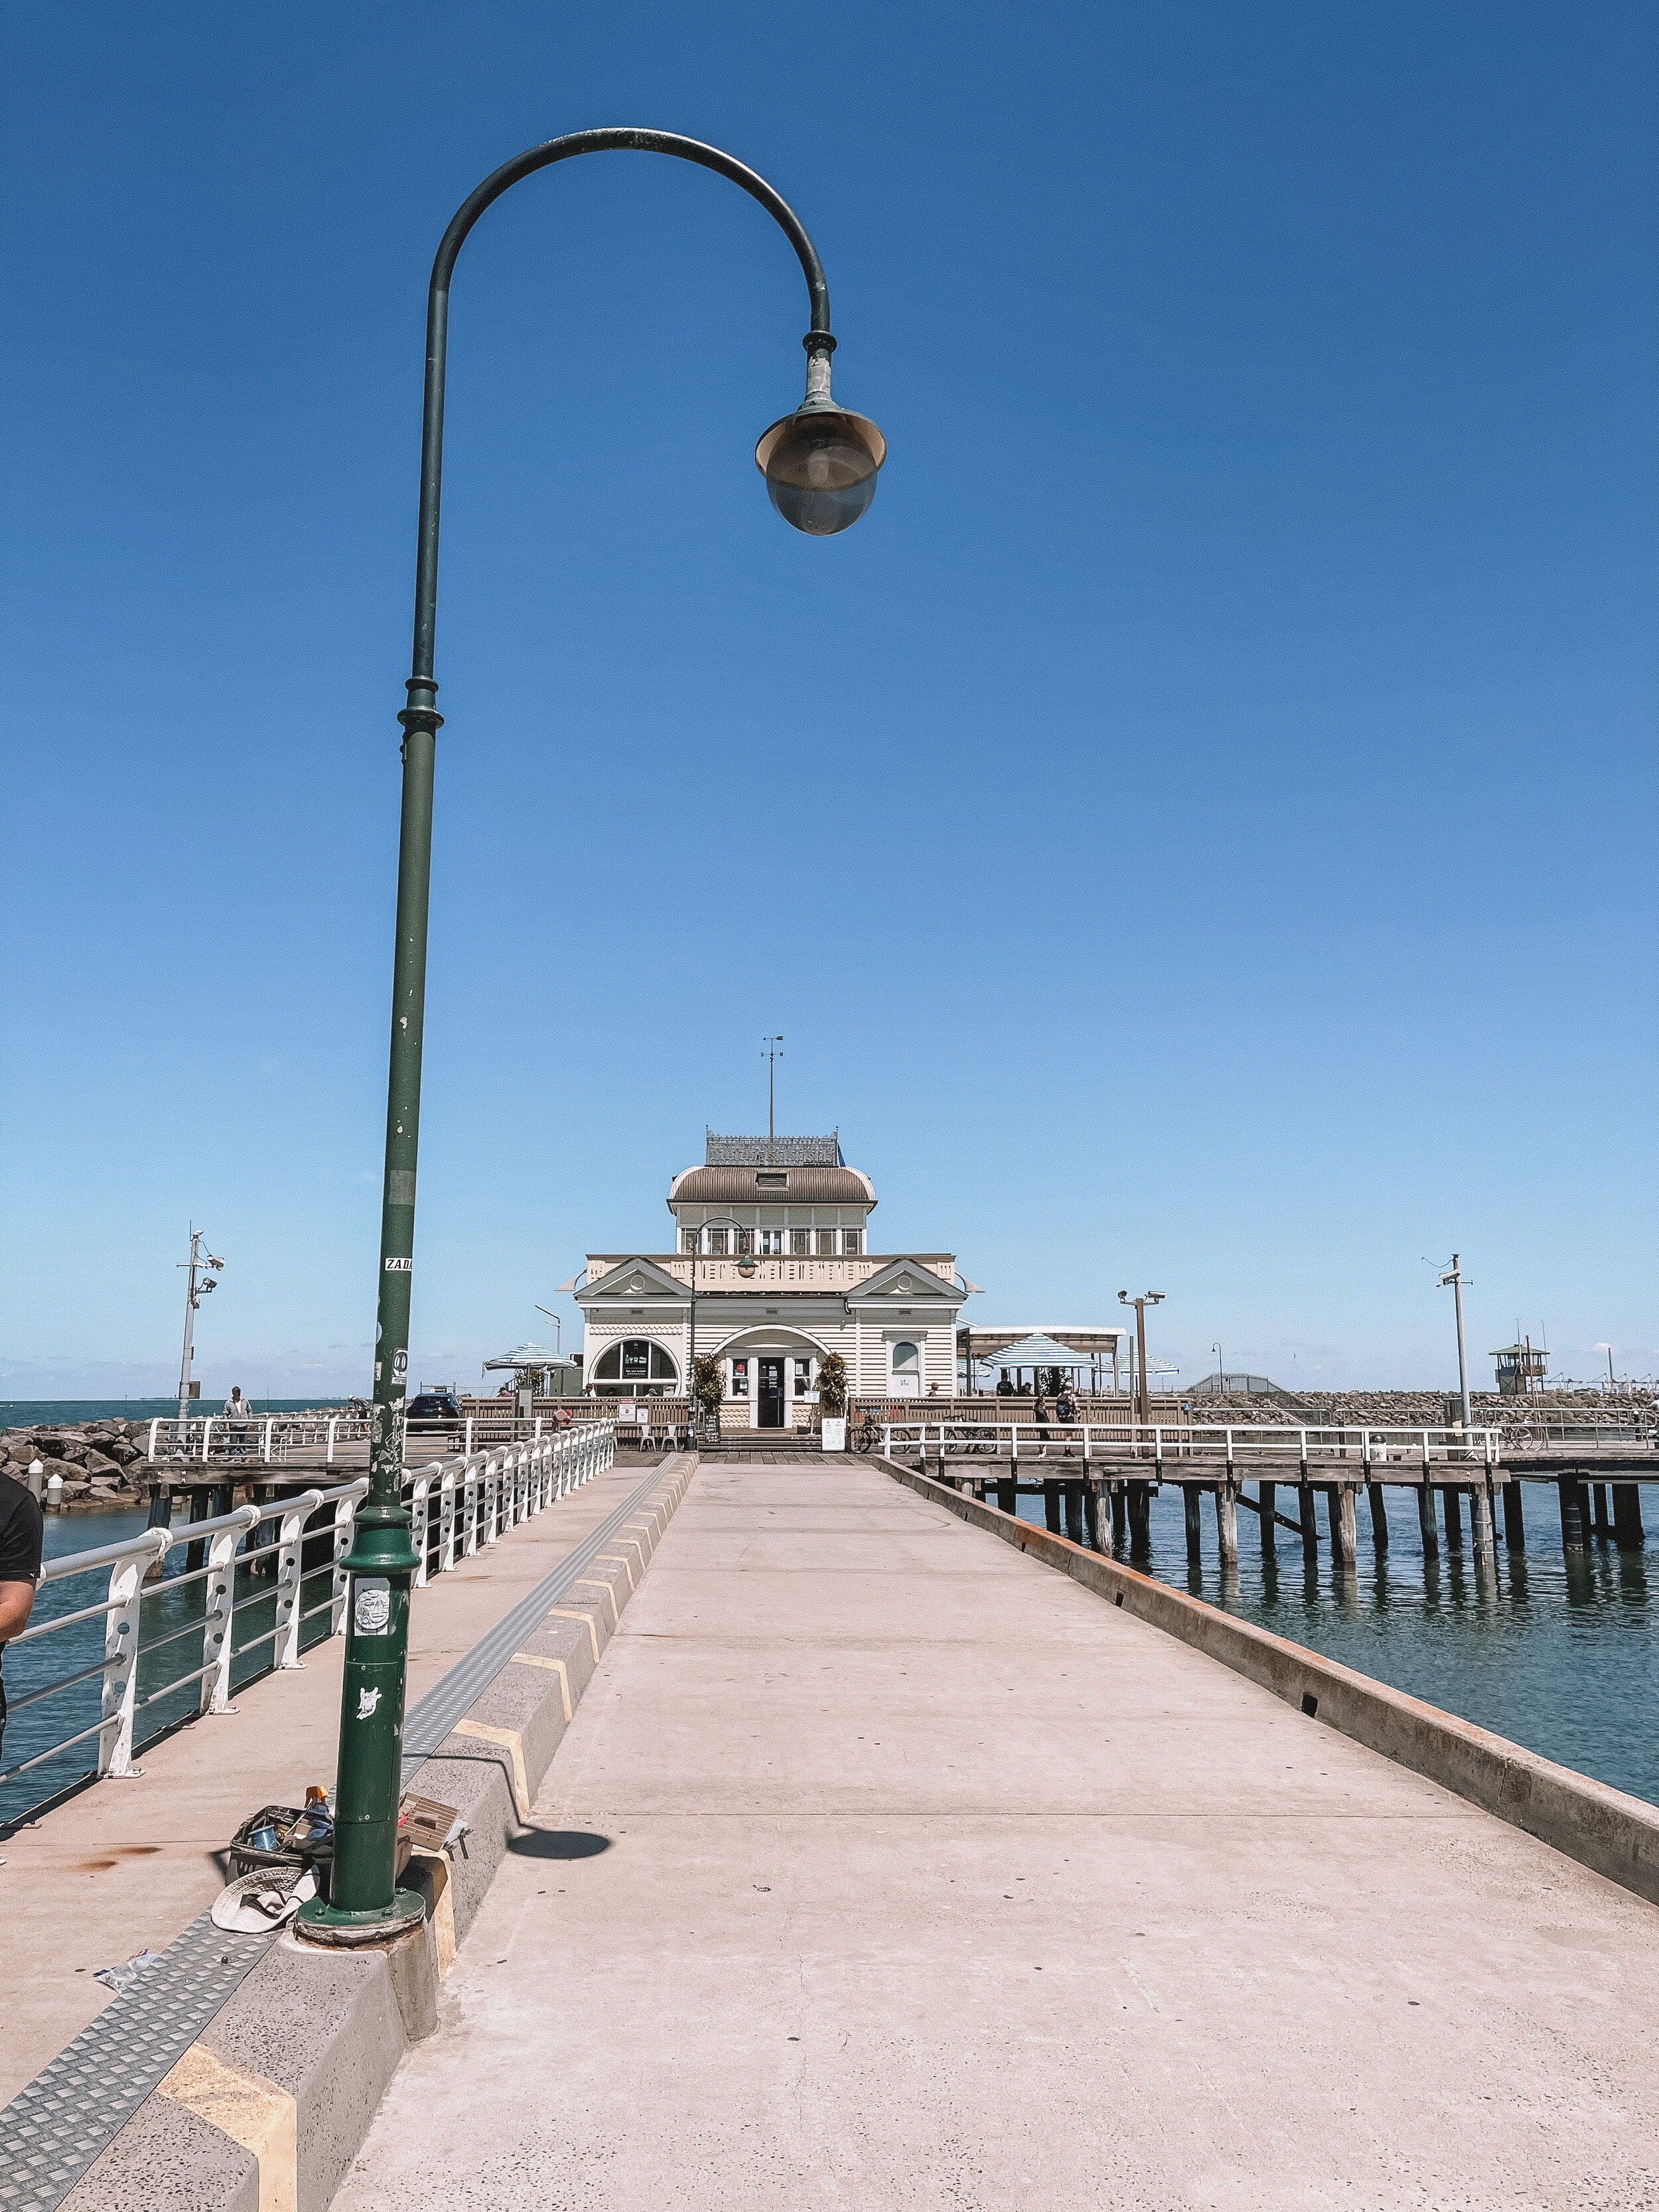 The Pier - St Kilda - Melbourne - Victoria - Australia